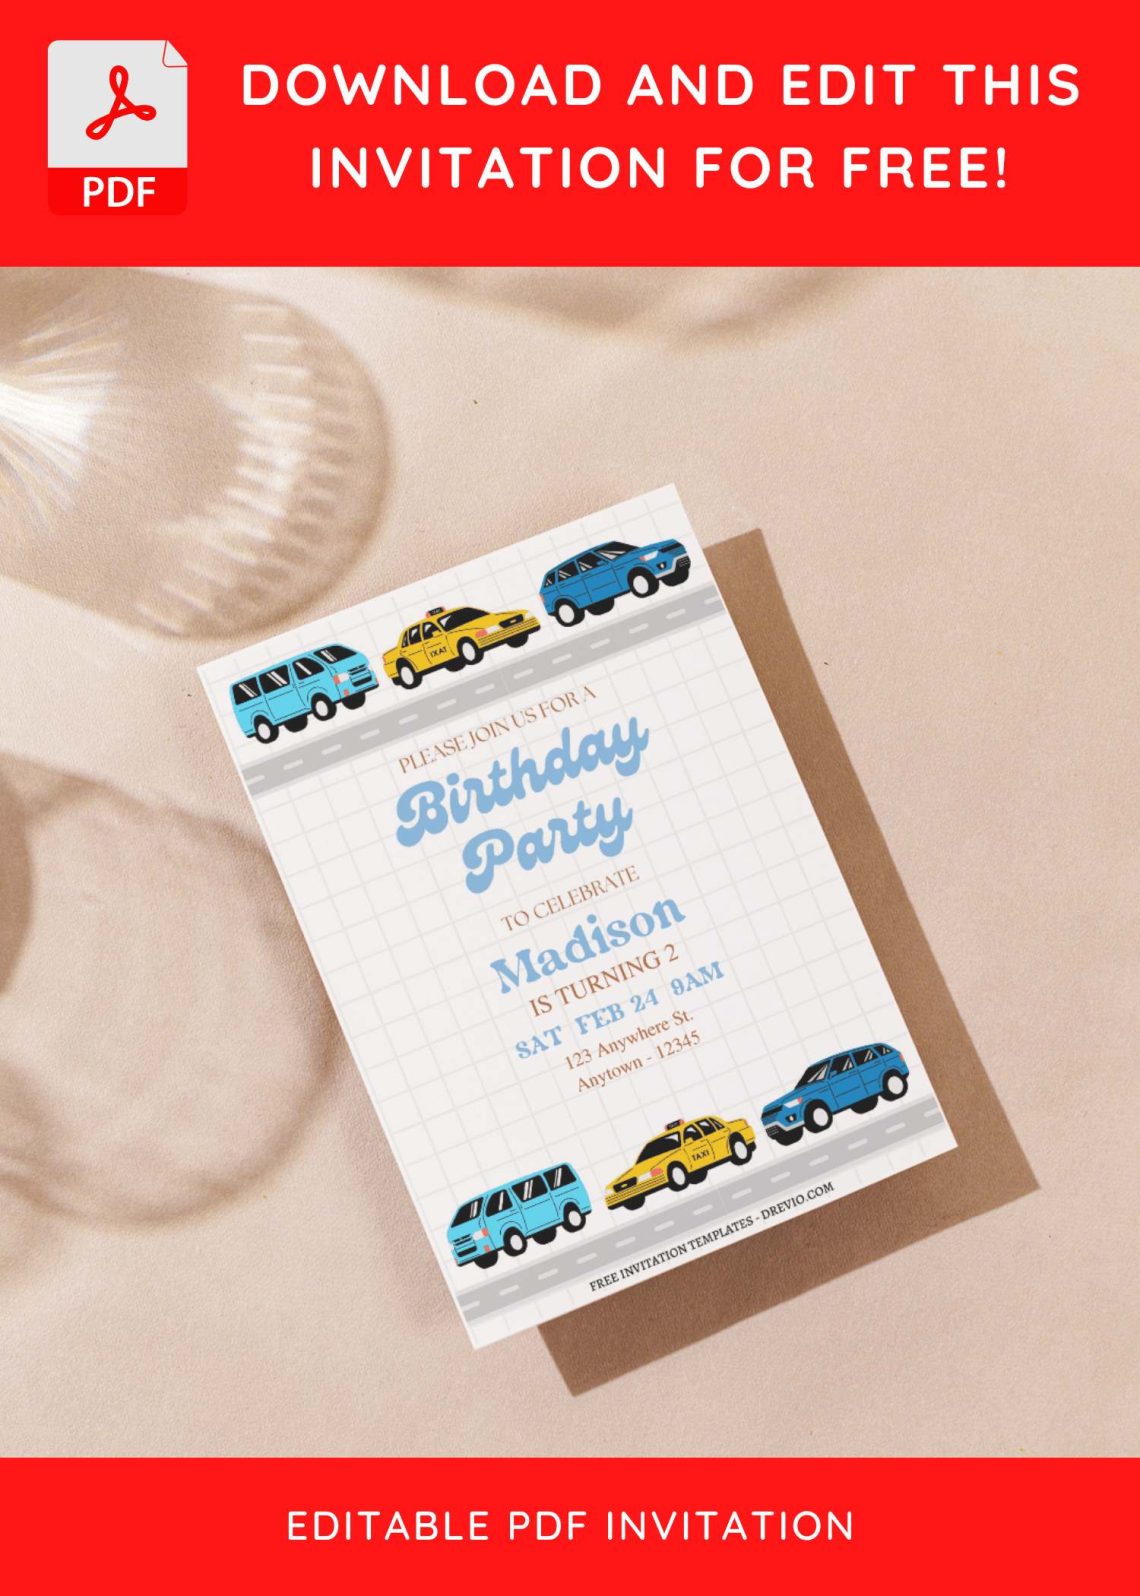 (Free Editable PDF) Cute Transportation Car Birthday Invitation Templates G